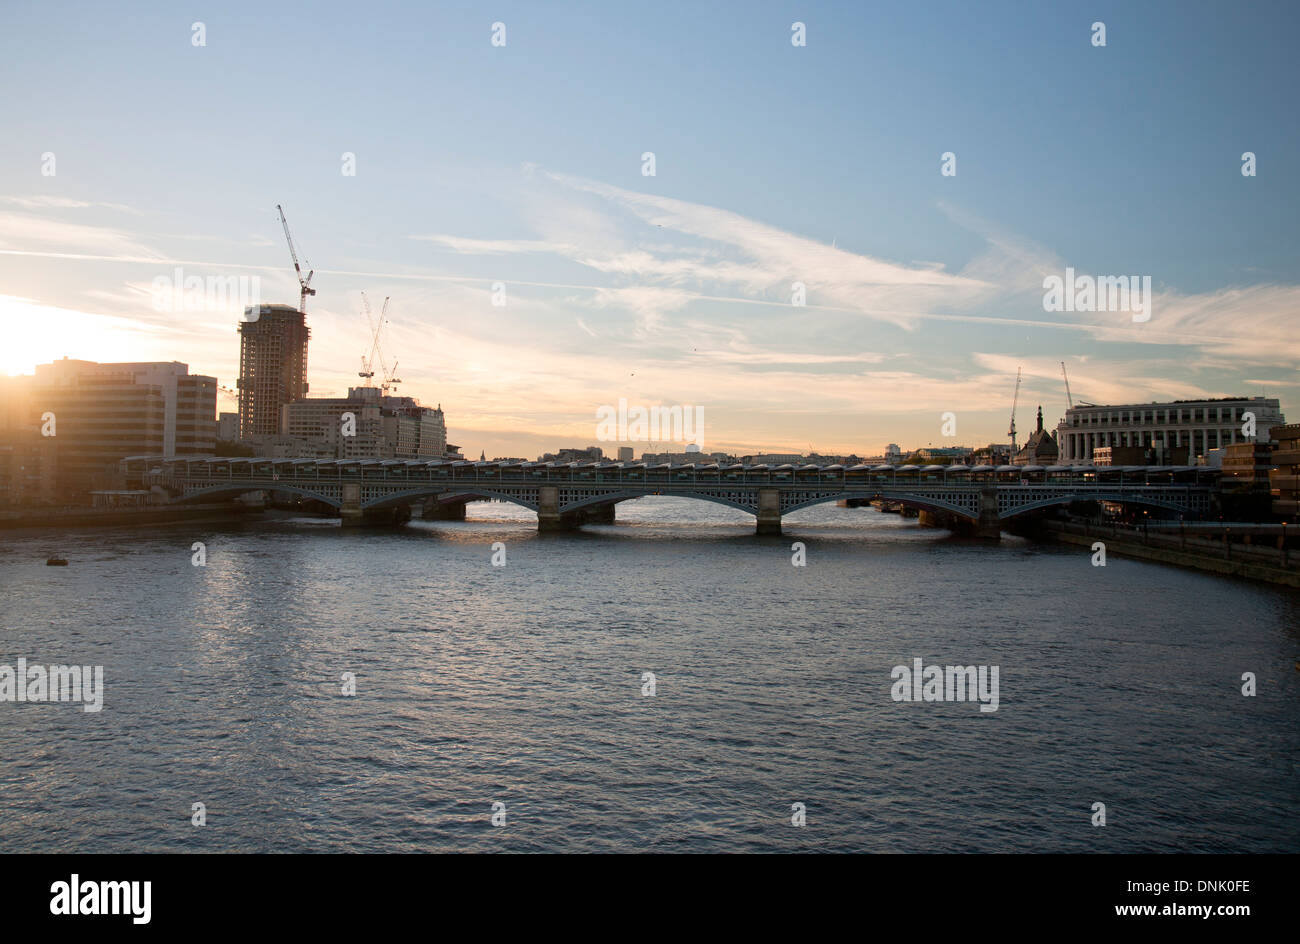 View of Blackfriars Railway Bridge showing the River Thames, London, England, United Kingdom Stock Photo